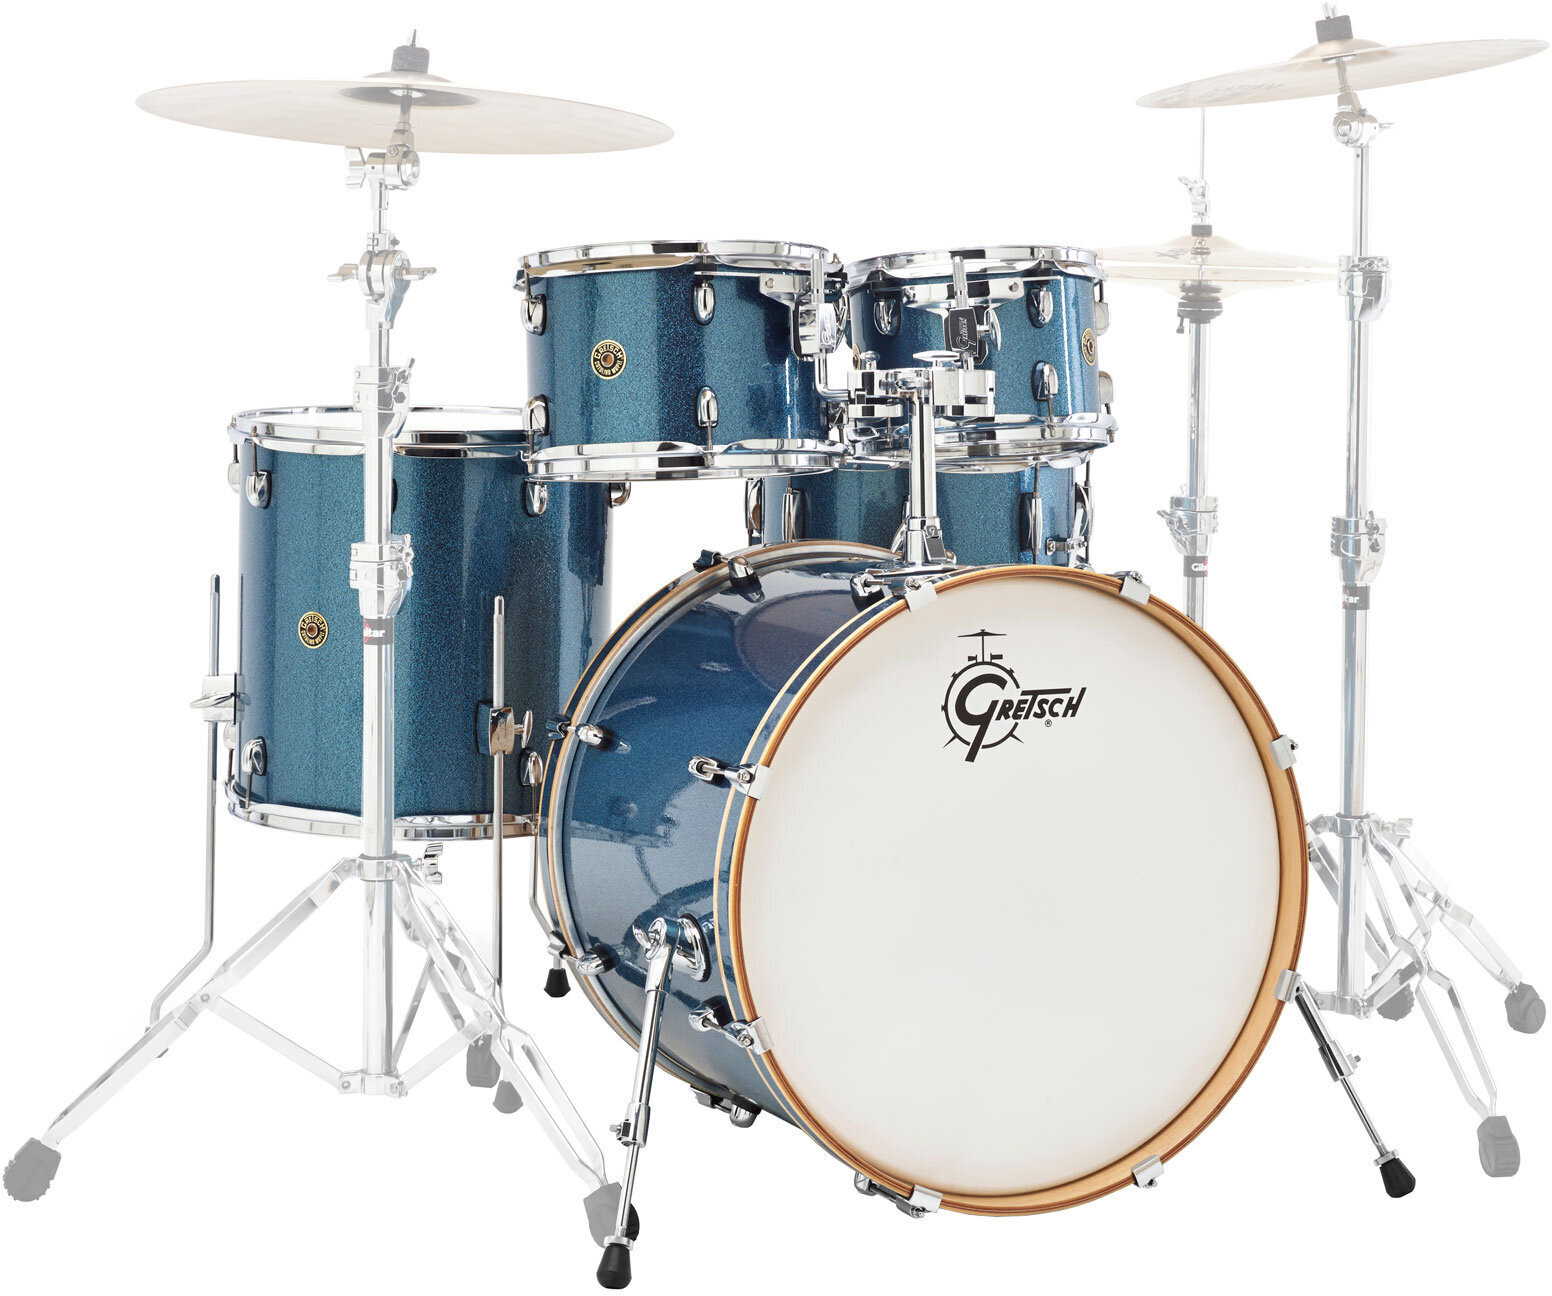 Dobszett Gretsch Drums CM1-E825 Catalina Maple Aqua Sparkle